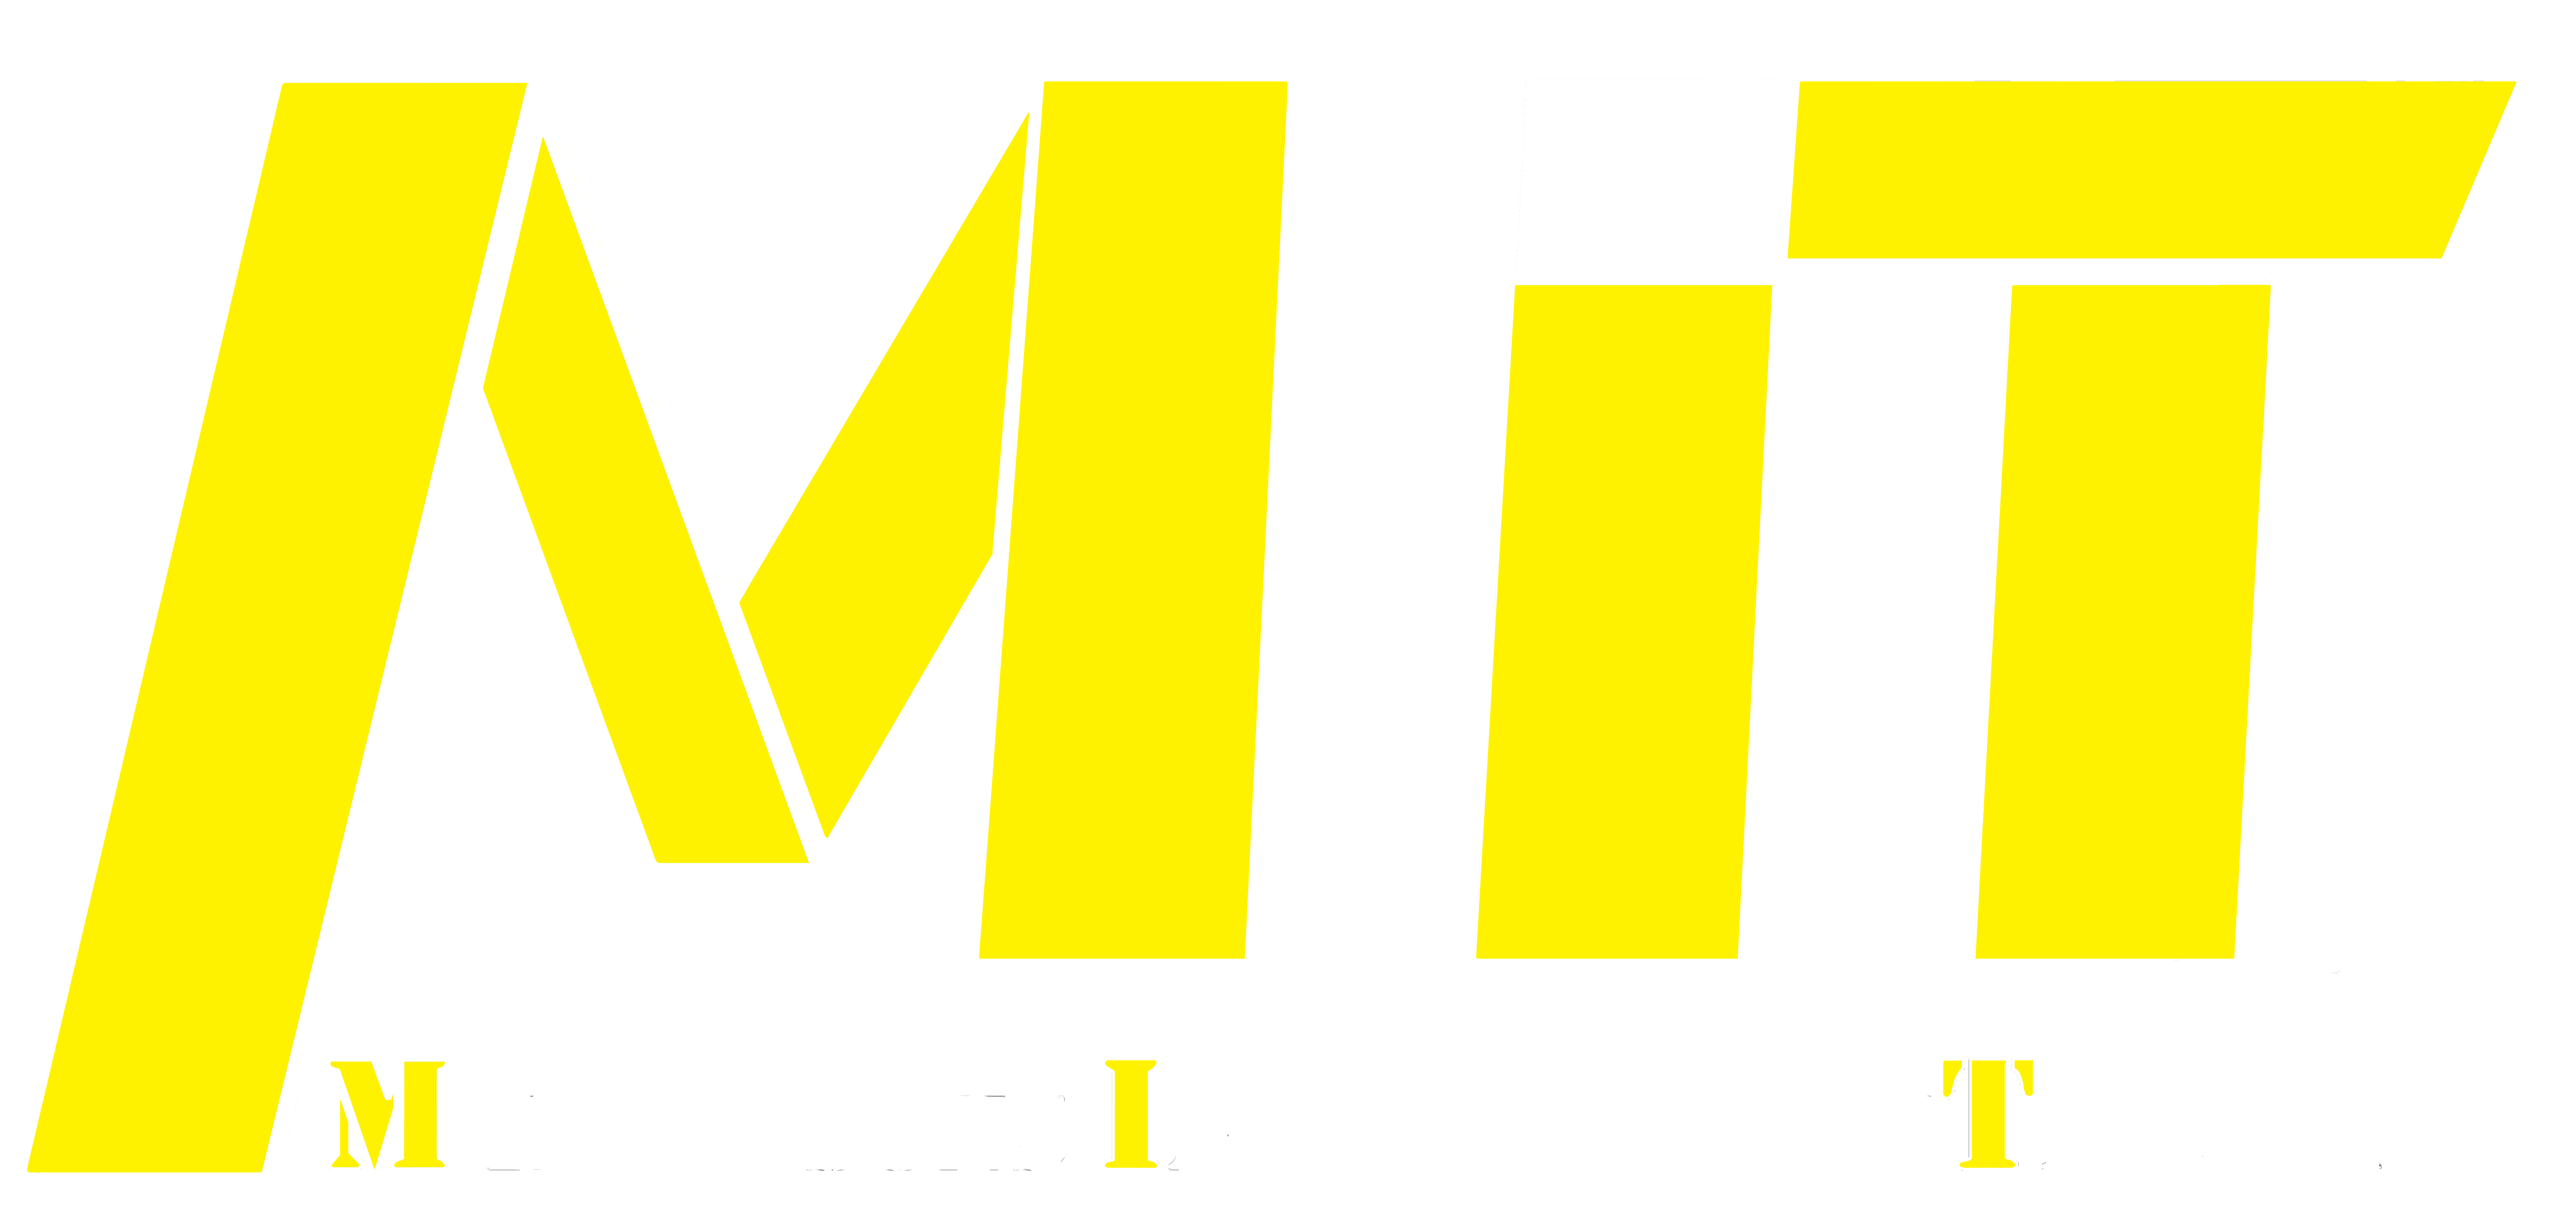 Marcussons Installationsteknik AB